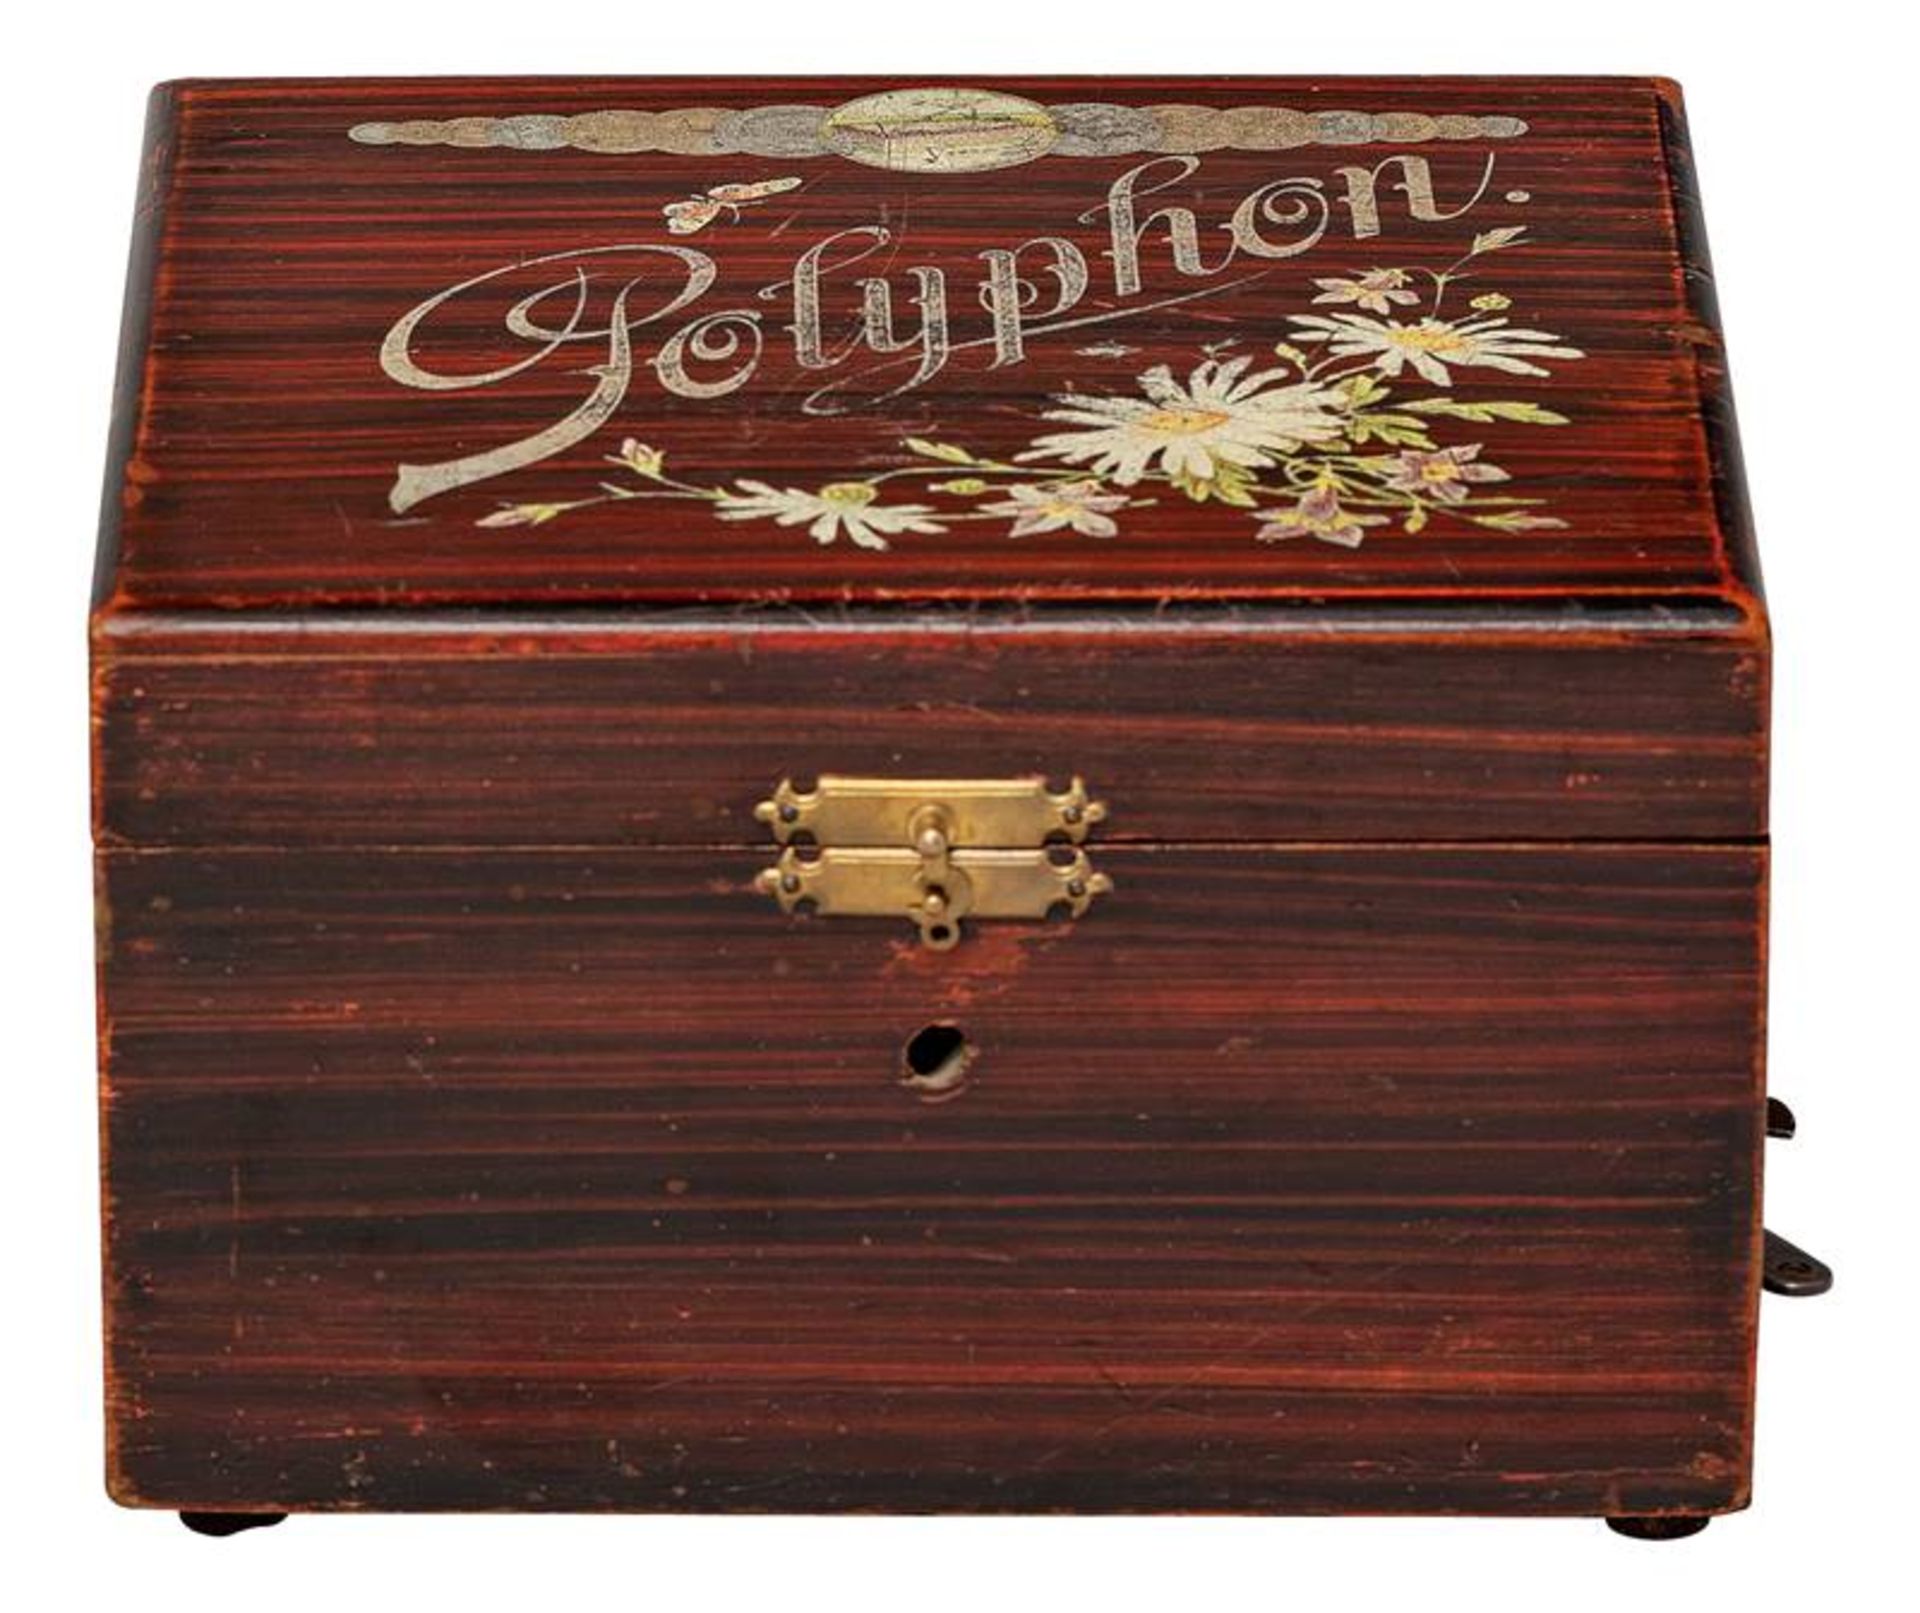 Polyphon music box - Image 2 of 2